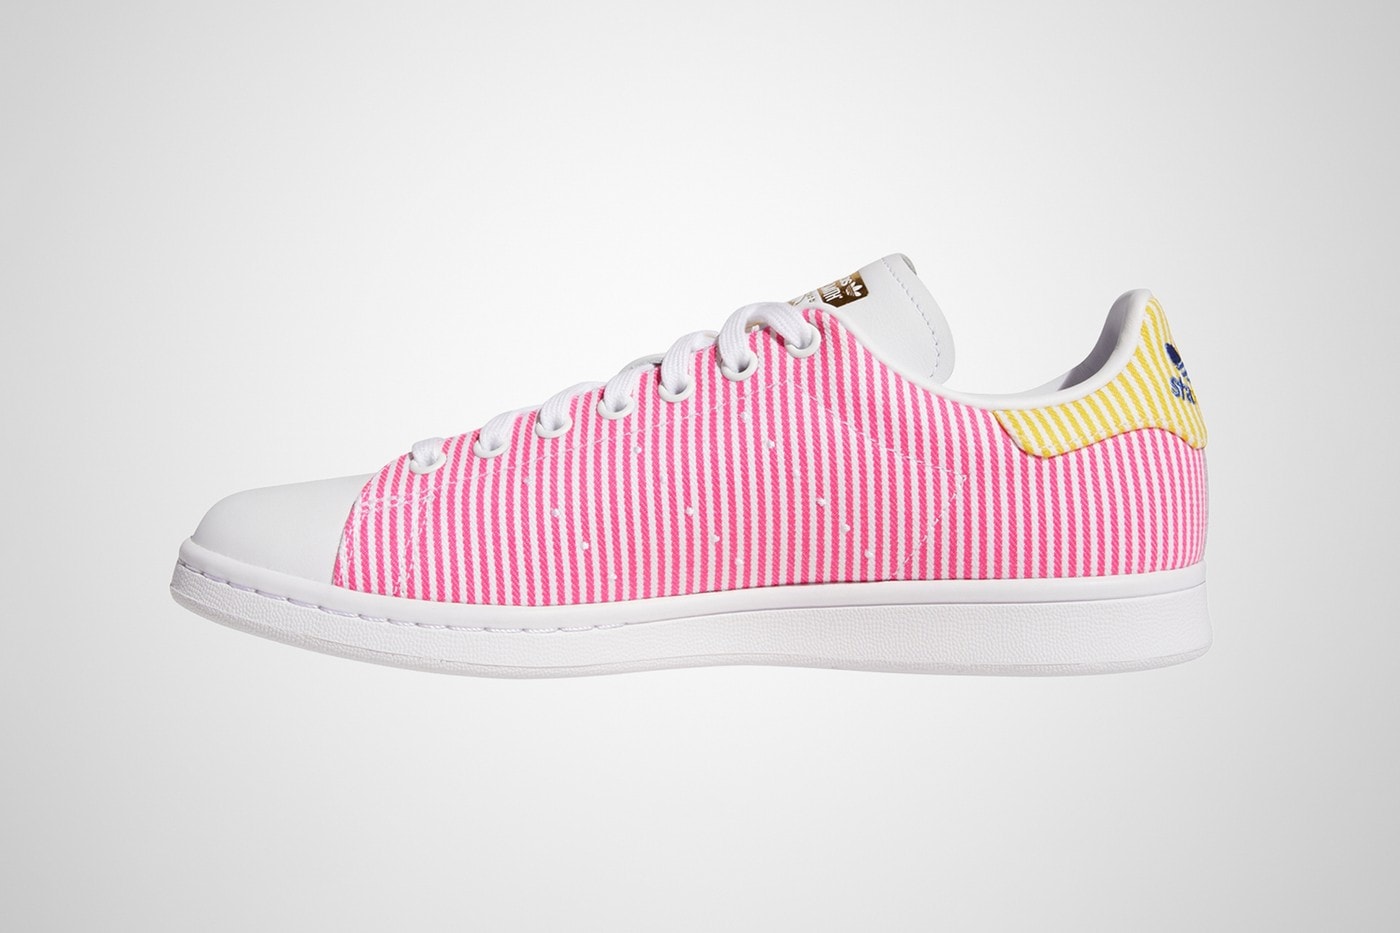 Adidas originals stan smith carerra low pride month sneakers lgbtq pastel blue pink white